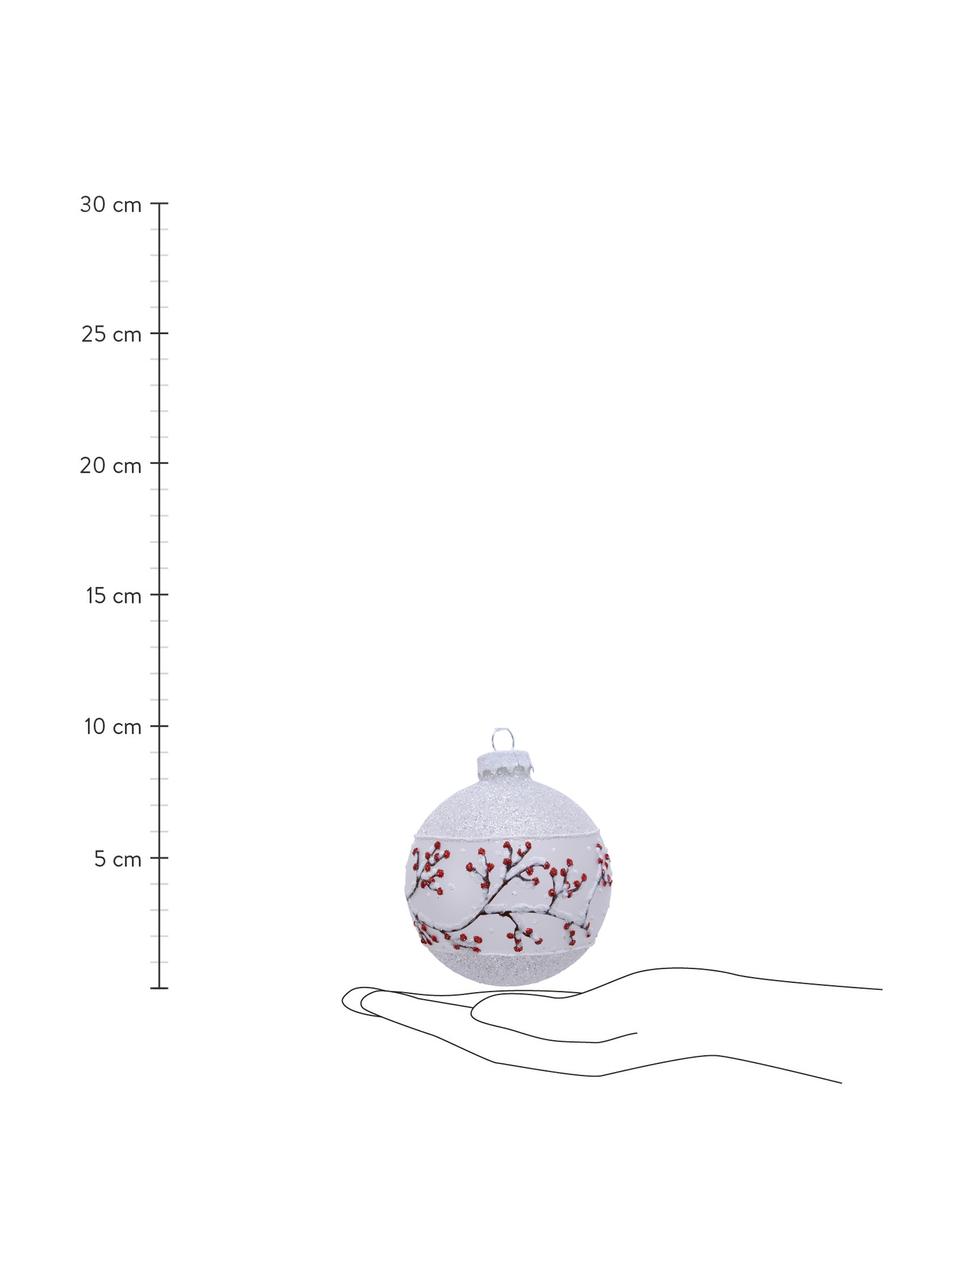 Kerstballen MistletoeØ 8 cm, 3 stuks, Wit, rood, zwart, Ø 8 cm